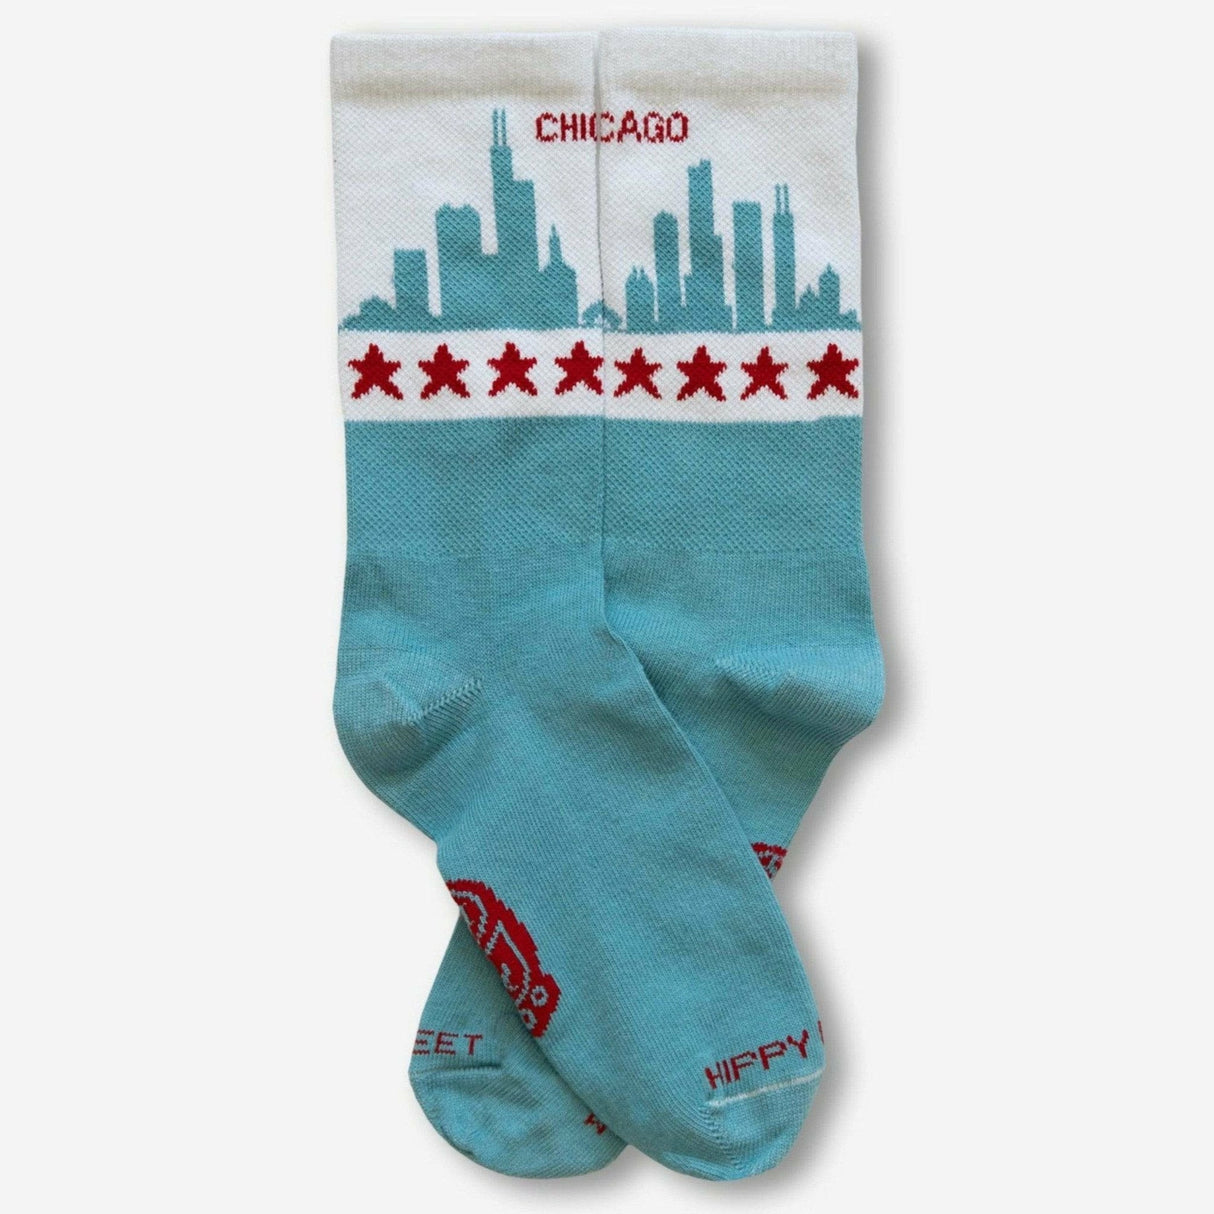 Hippy Feet Chicago Skyline Crew Socks  -  Small / Chicago